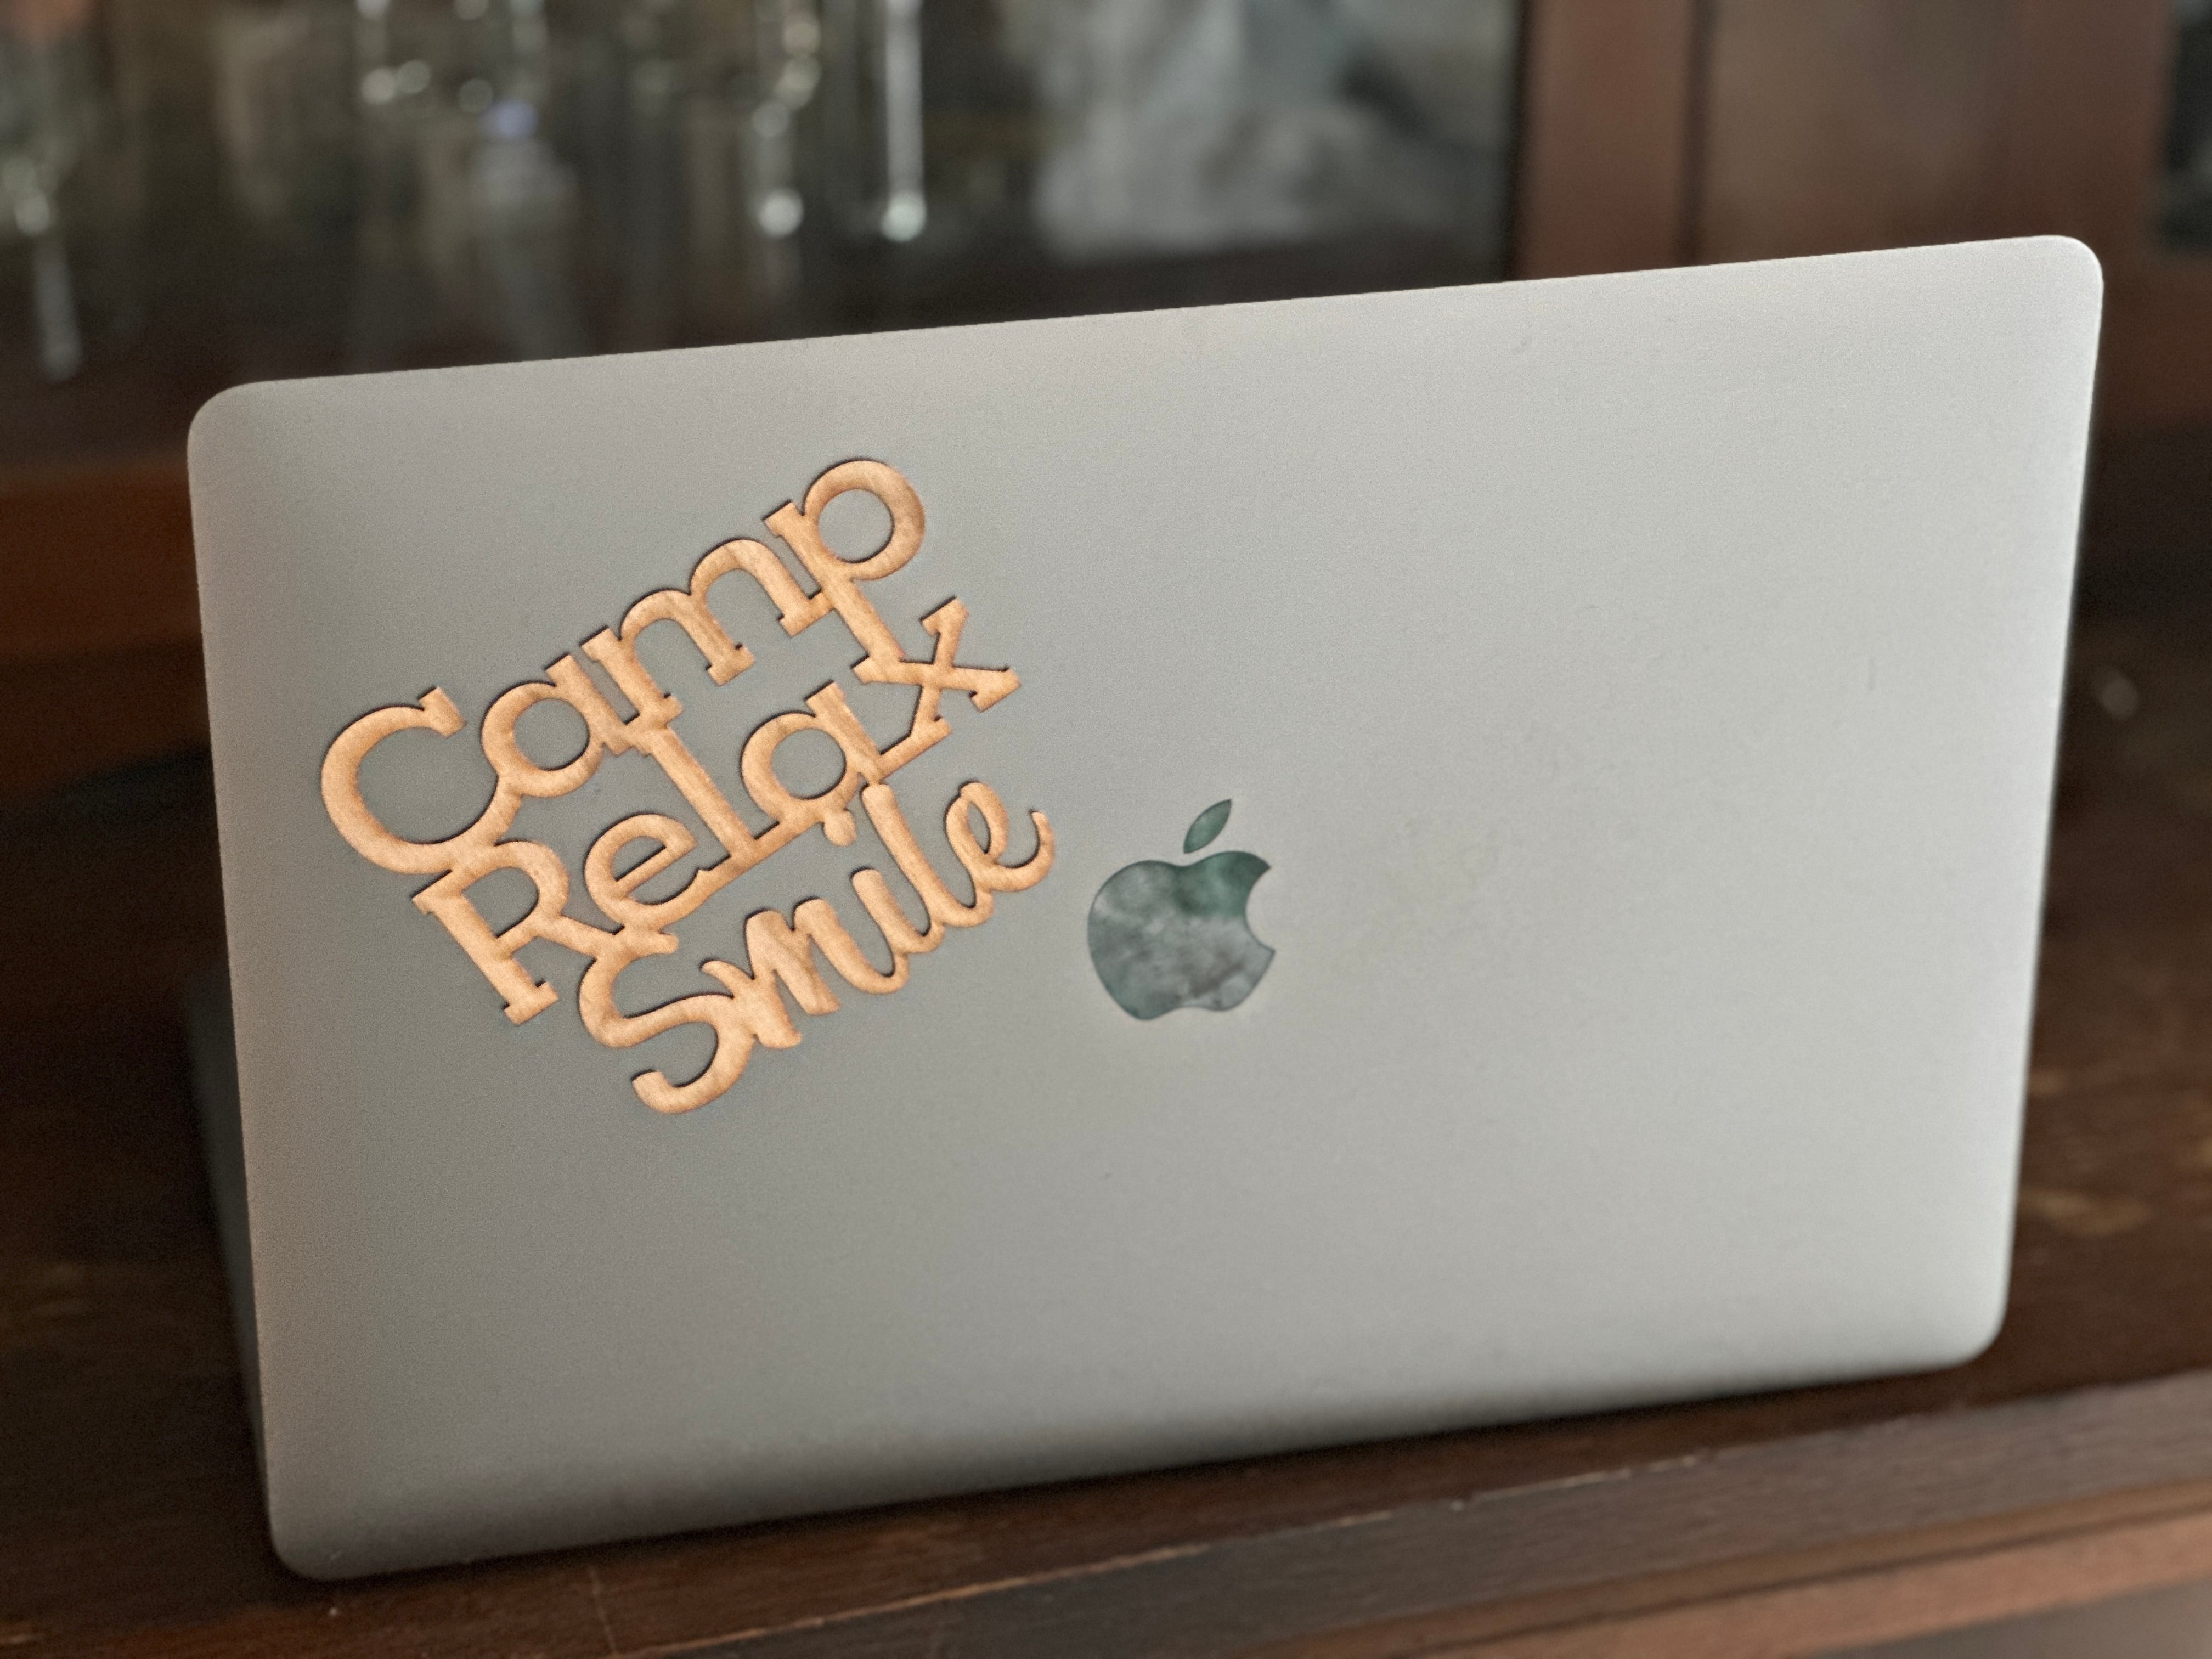 Camp &amp; Relax &amp; Smile Holz Schriftzug Kirschbaumholz Selbstklebend